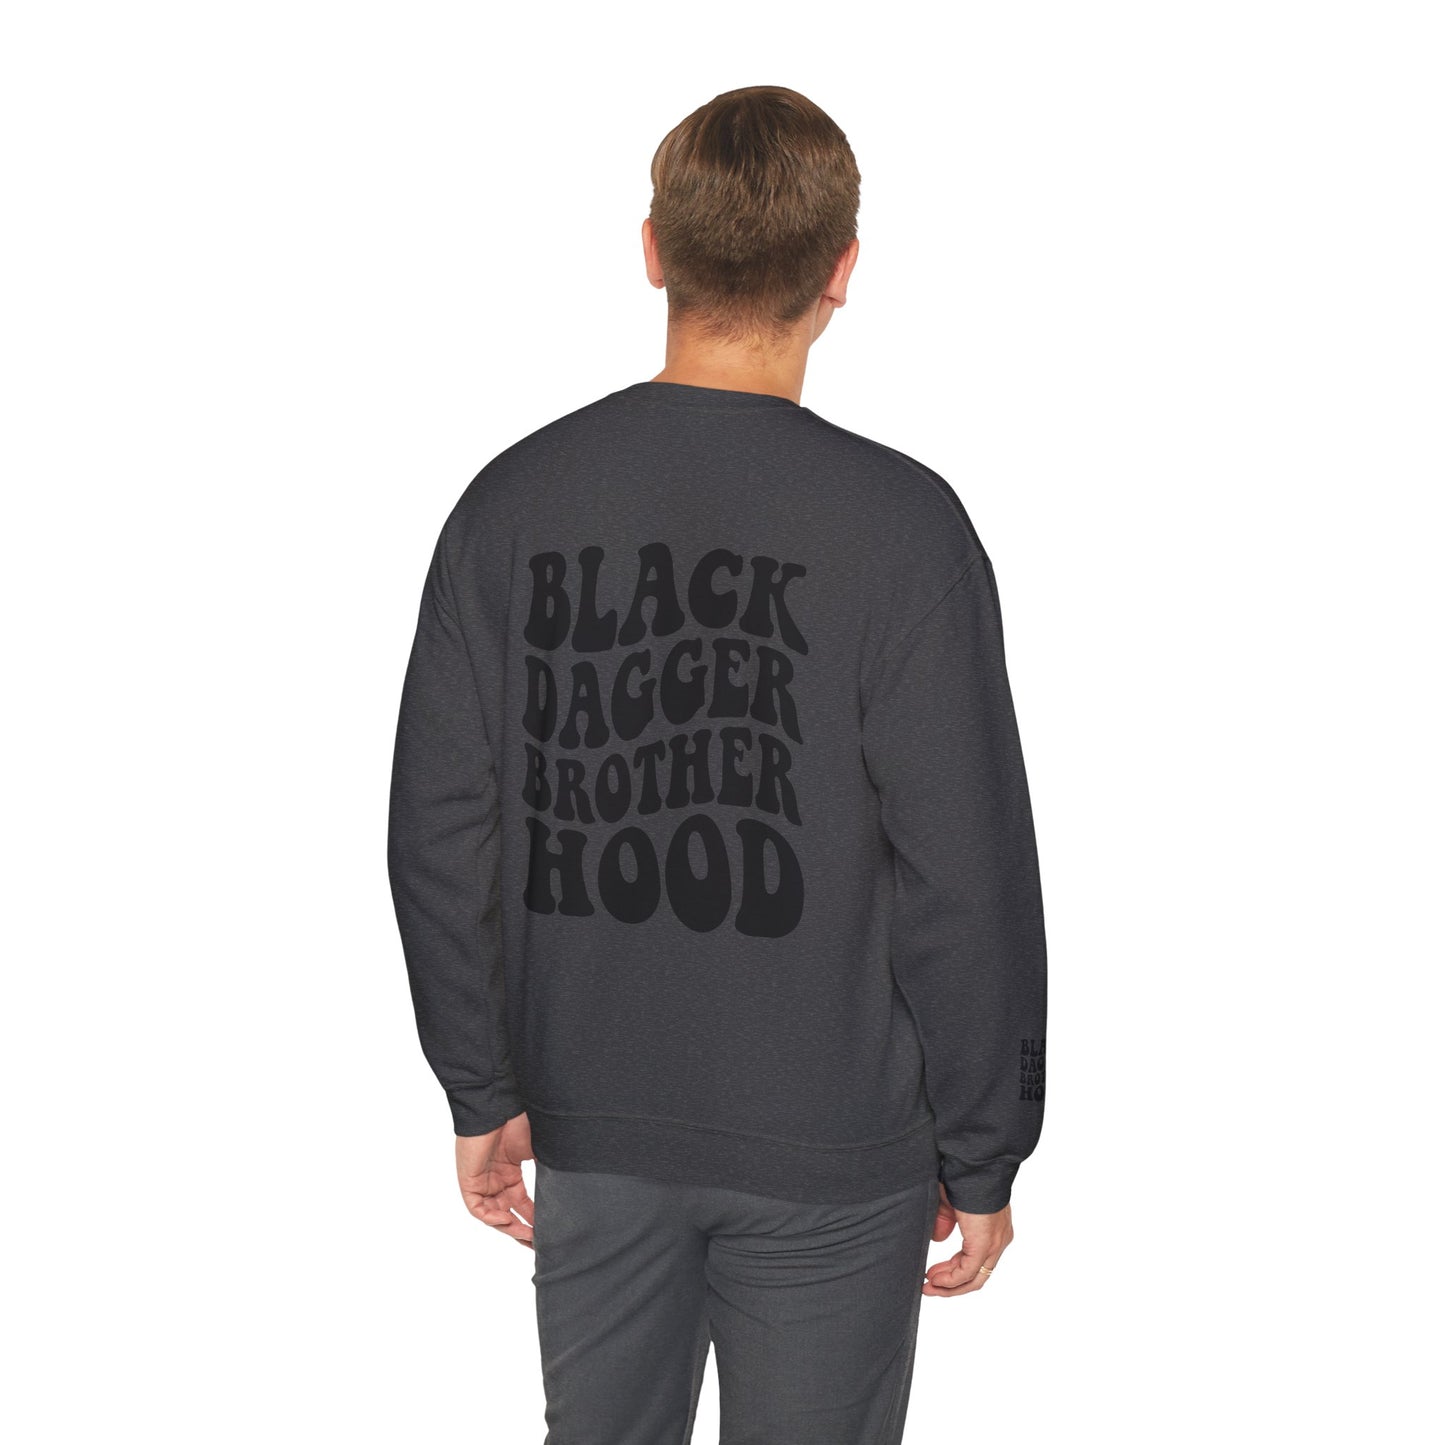 Black Dagger Brotherhood Crewneck Sweatshirt Pullover